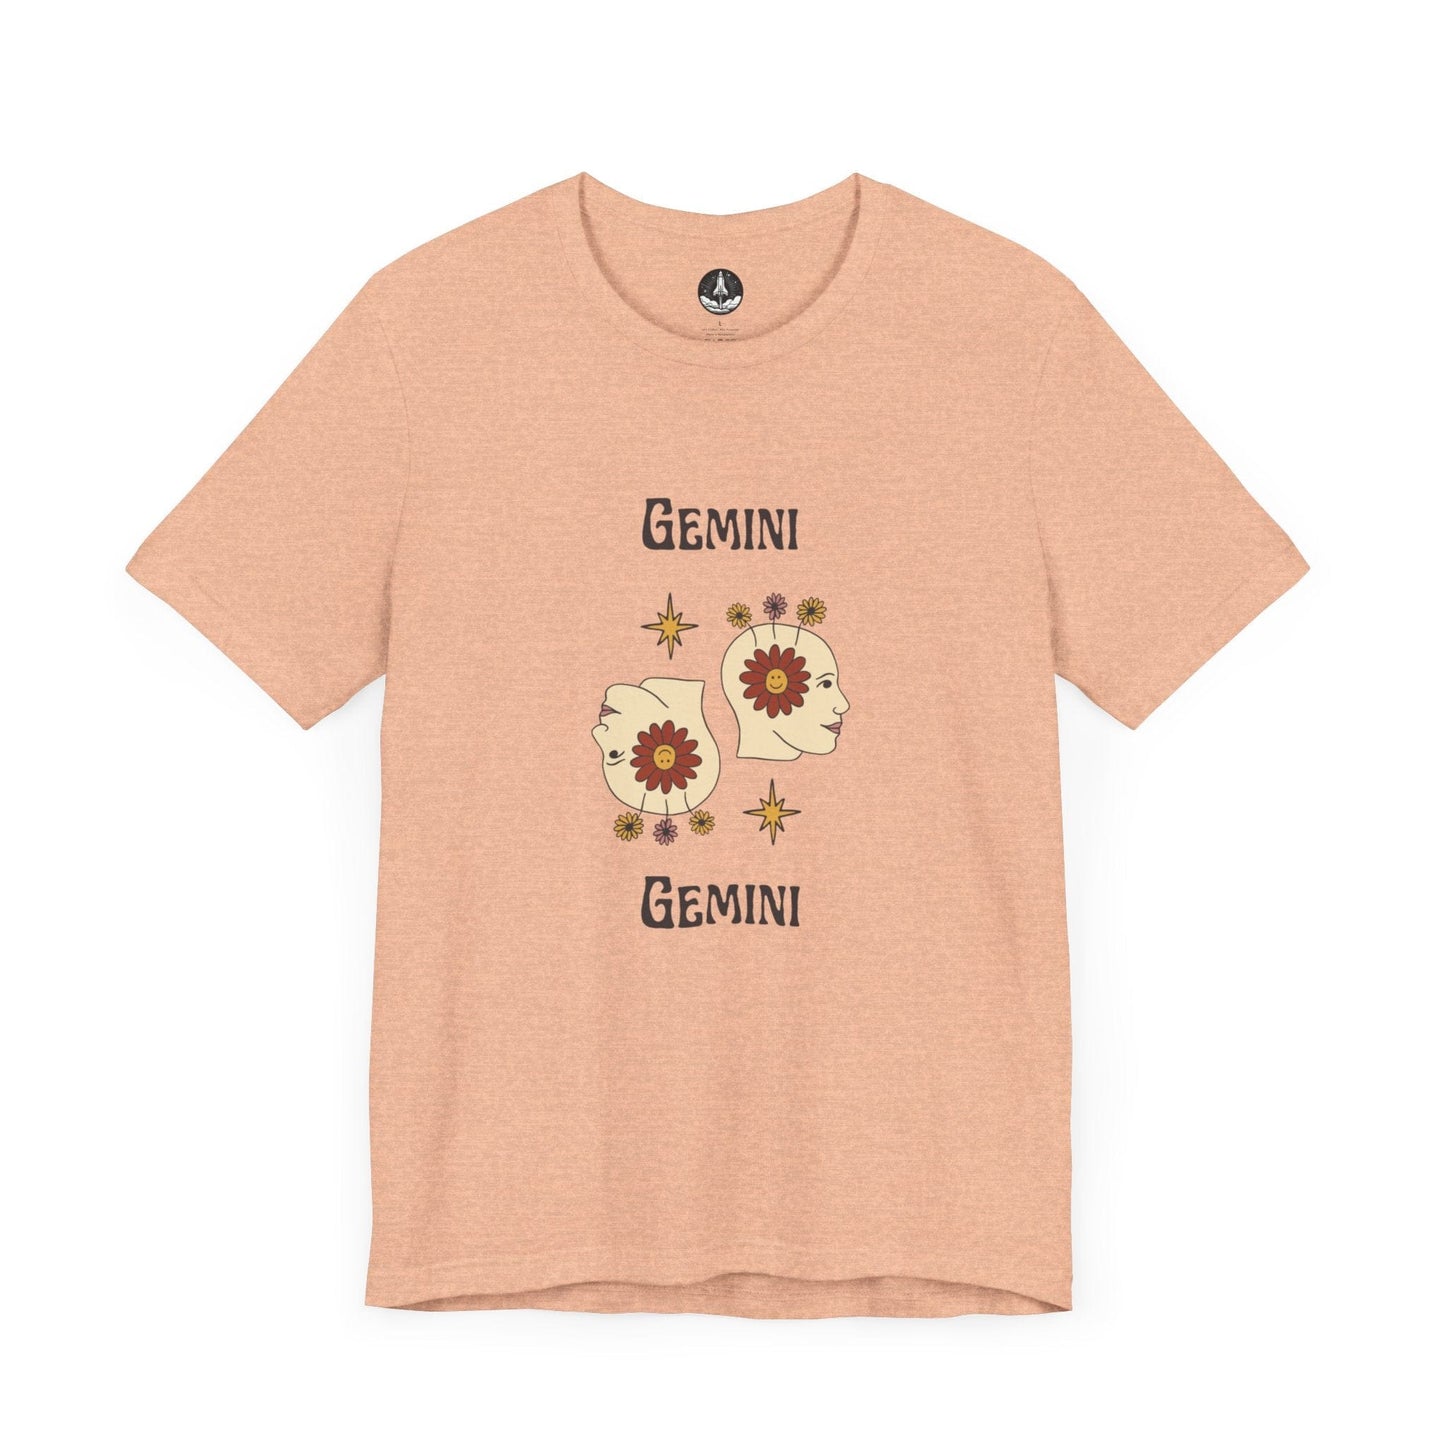 T-Shirt Heather Peach / S Gemini Flower Power T-Shirt - Retro Zodiac Apparel for Astrology Lovers